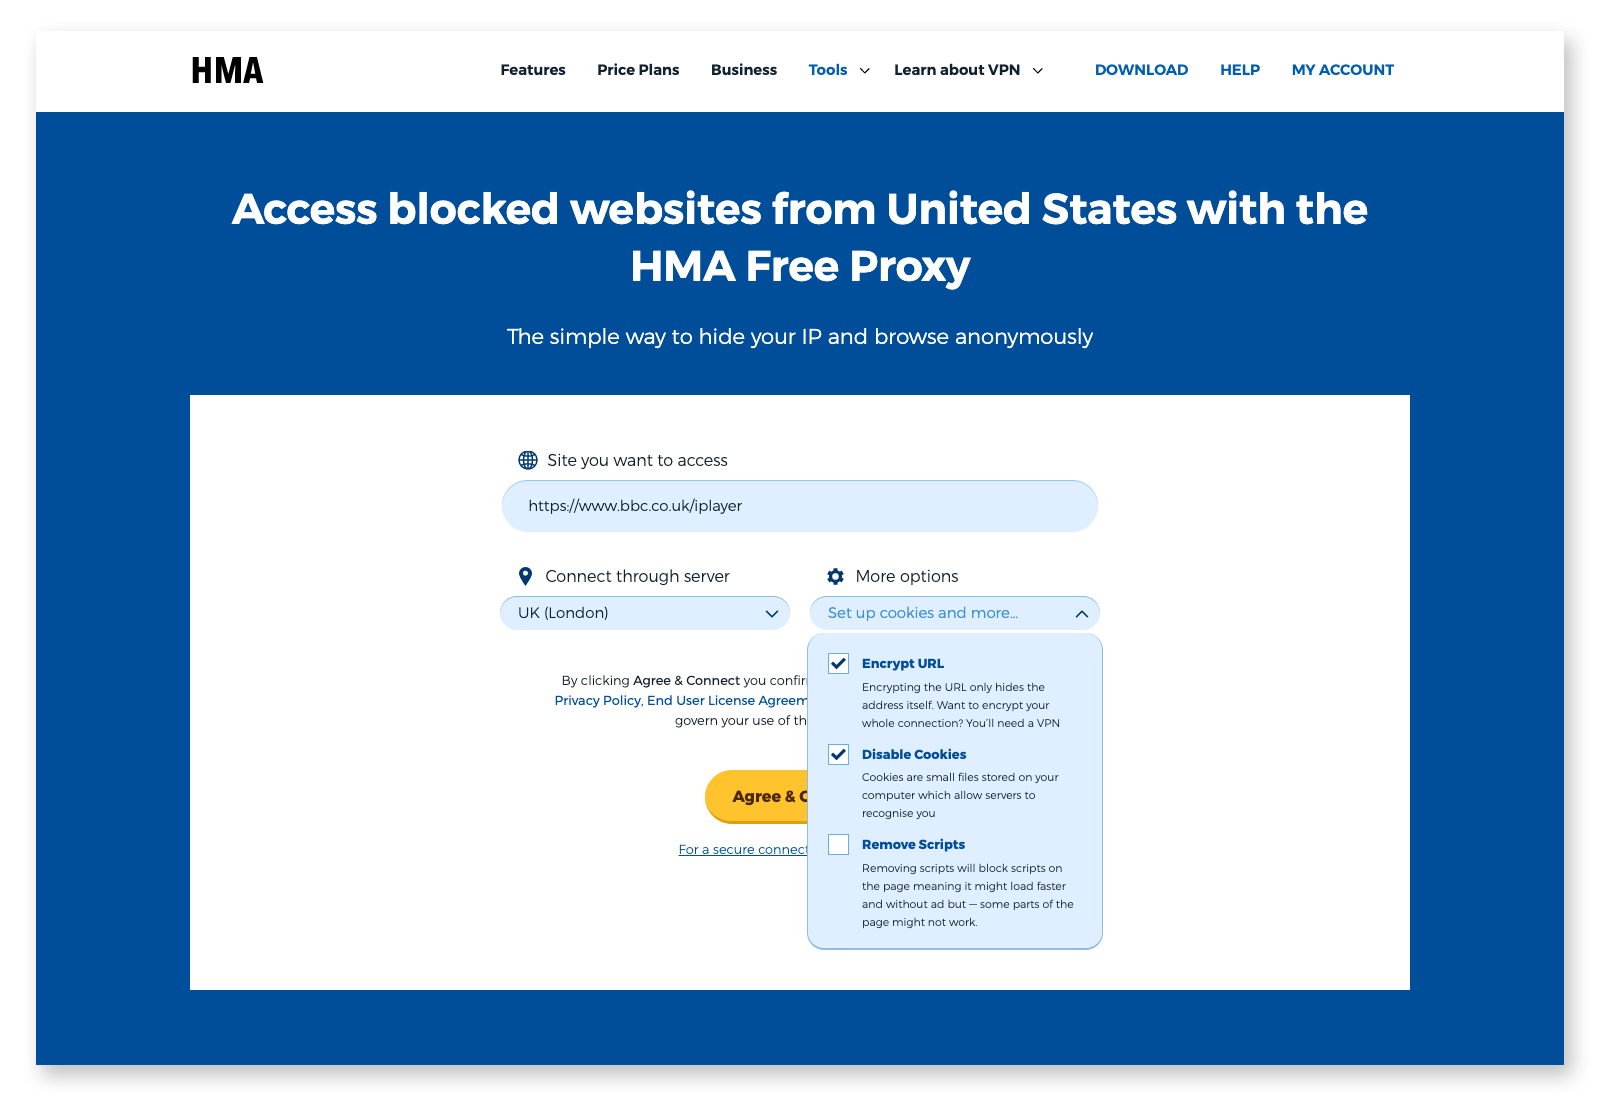 How do I unblock blocked websites?